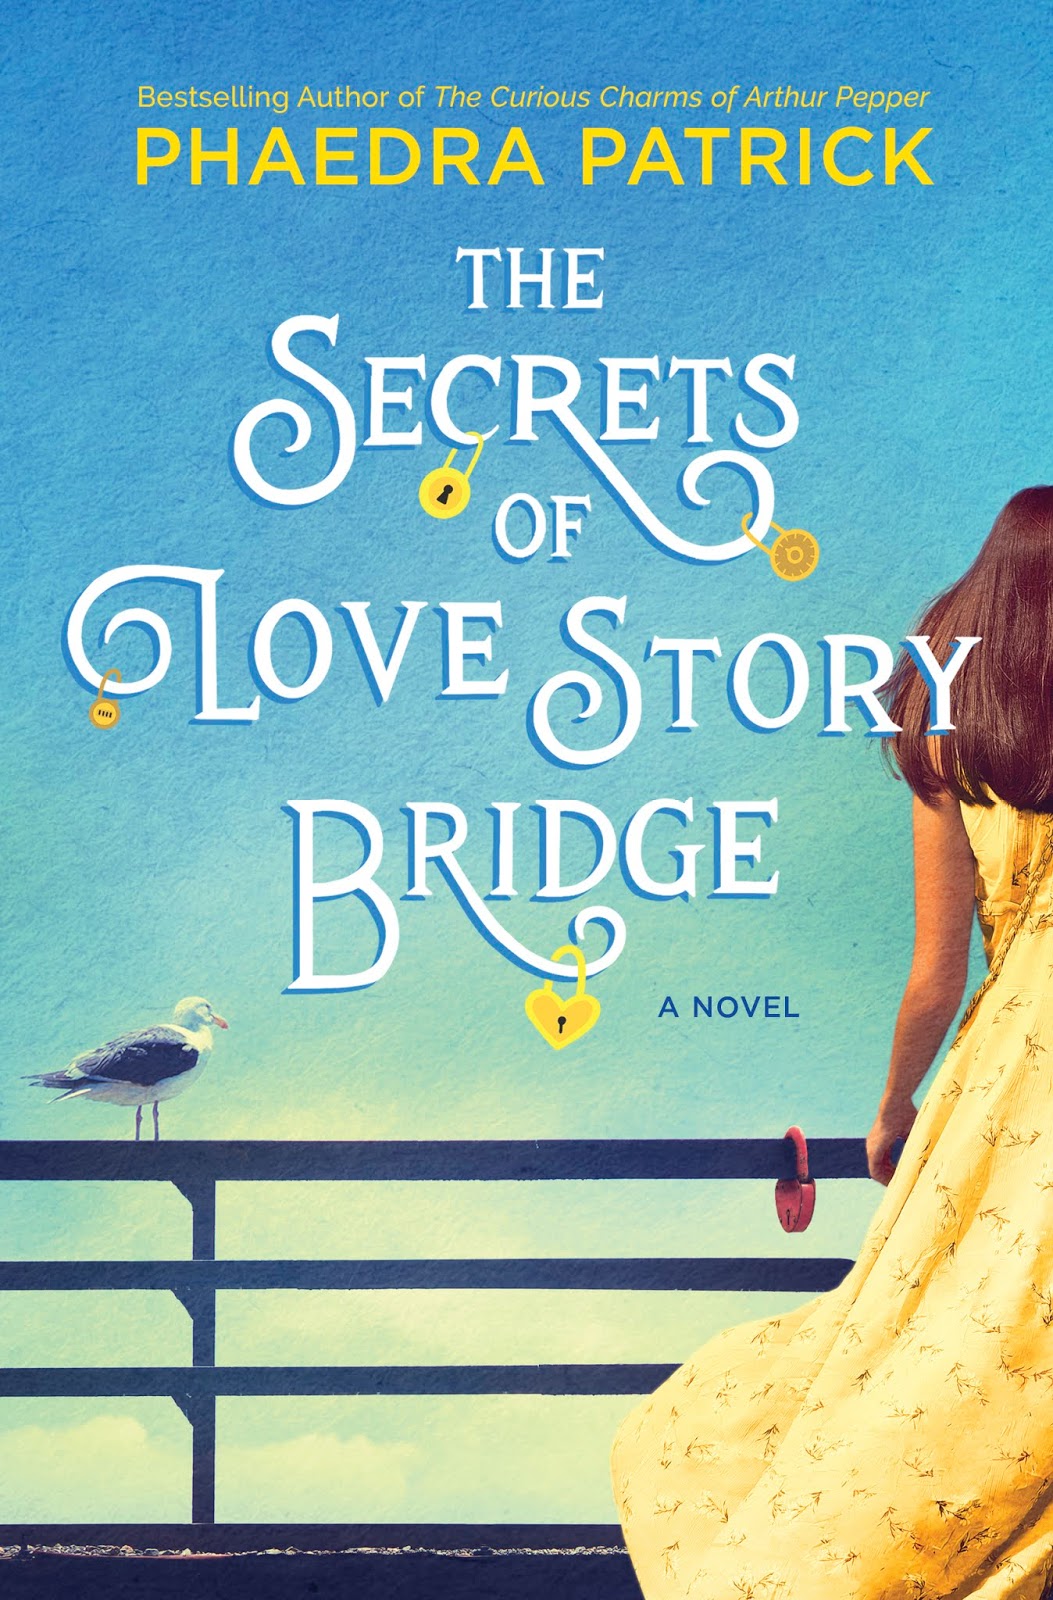 Review: The Secrets of Love Story Bridge by Phaedra Patrick (audio/print)